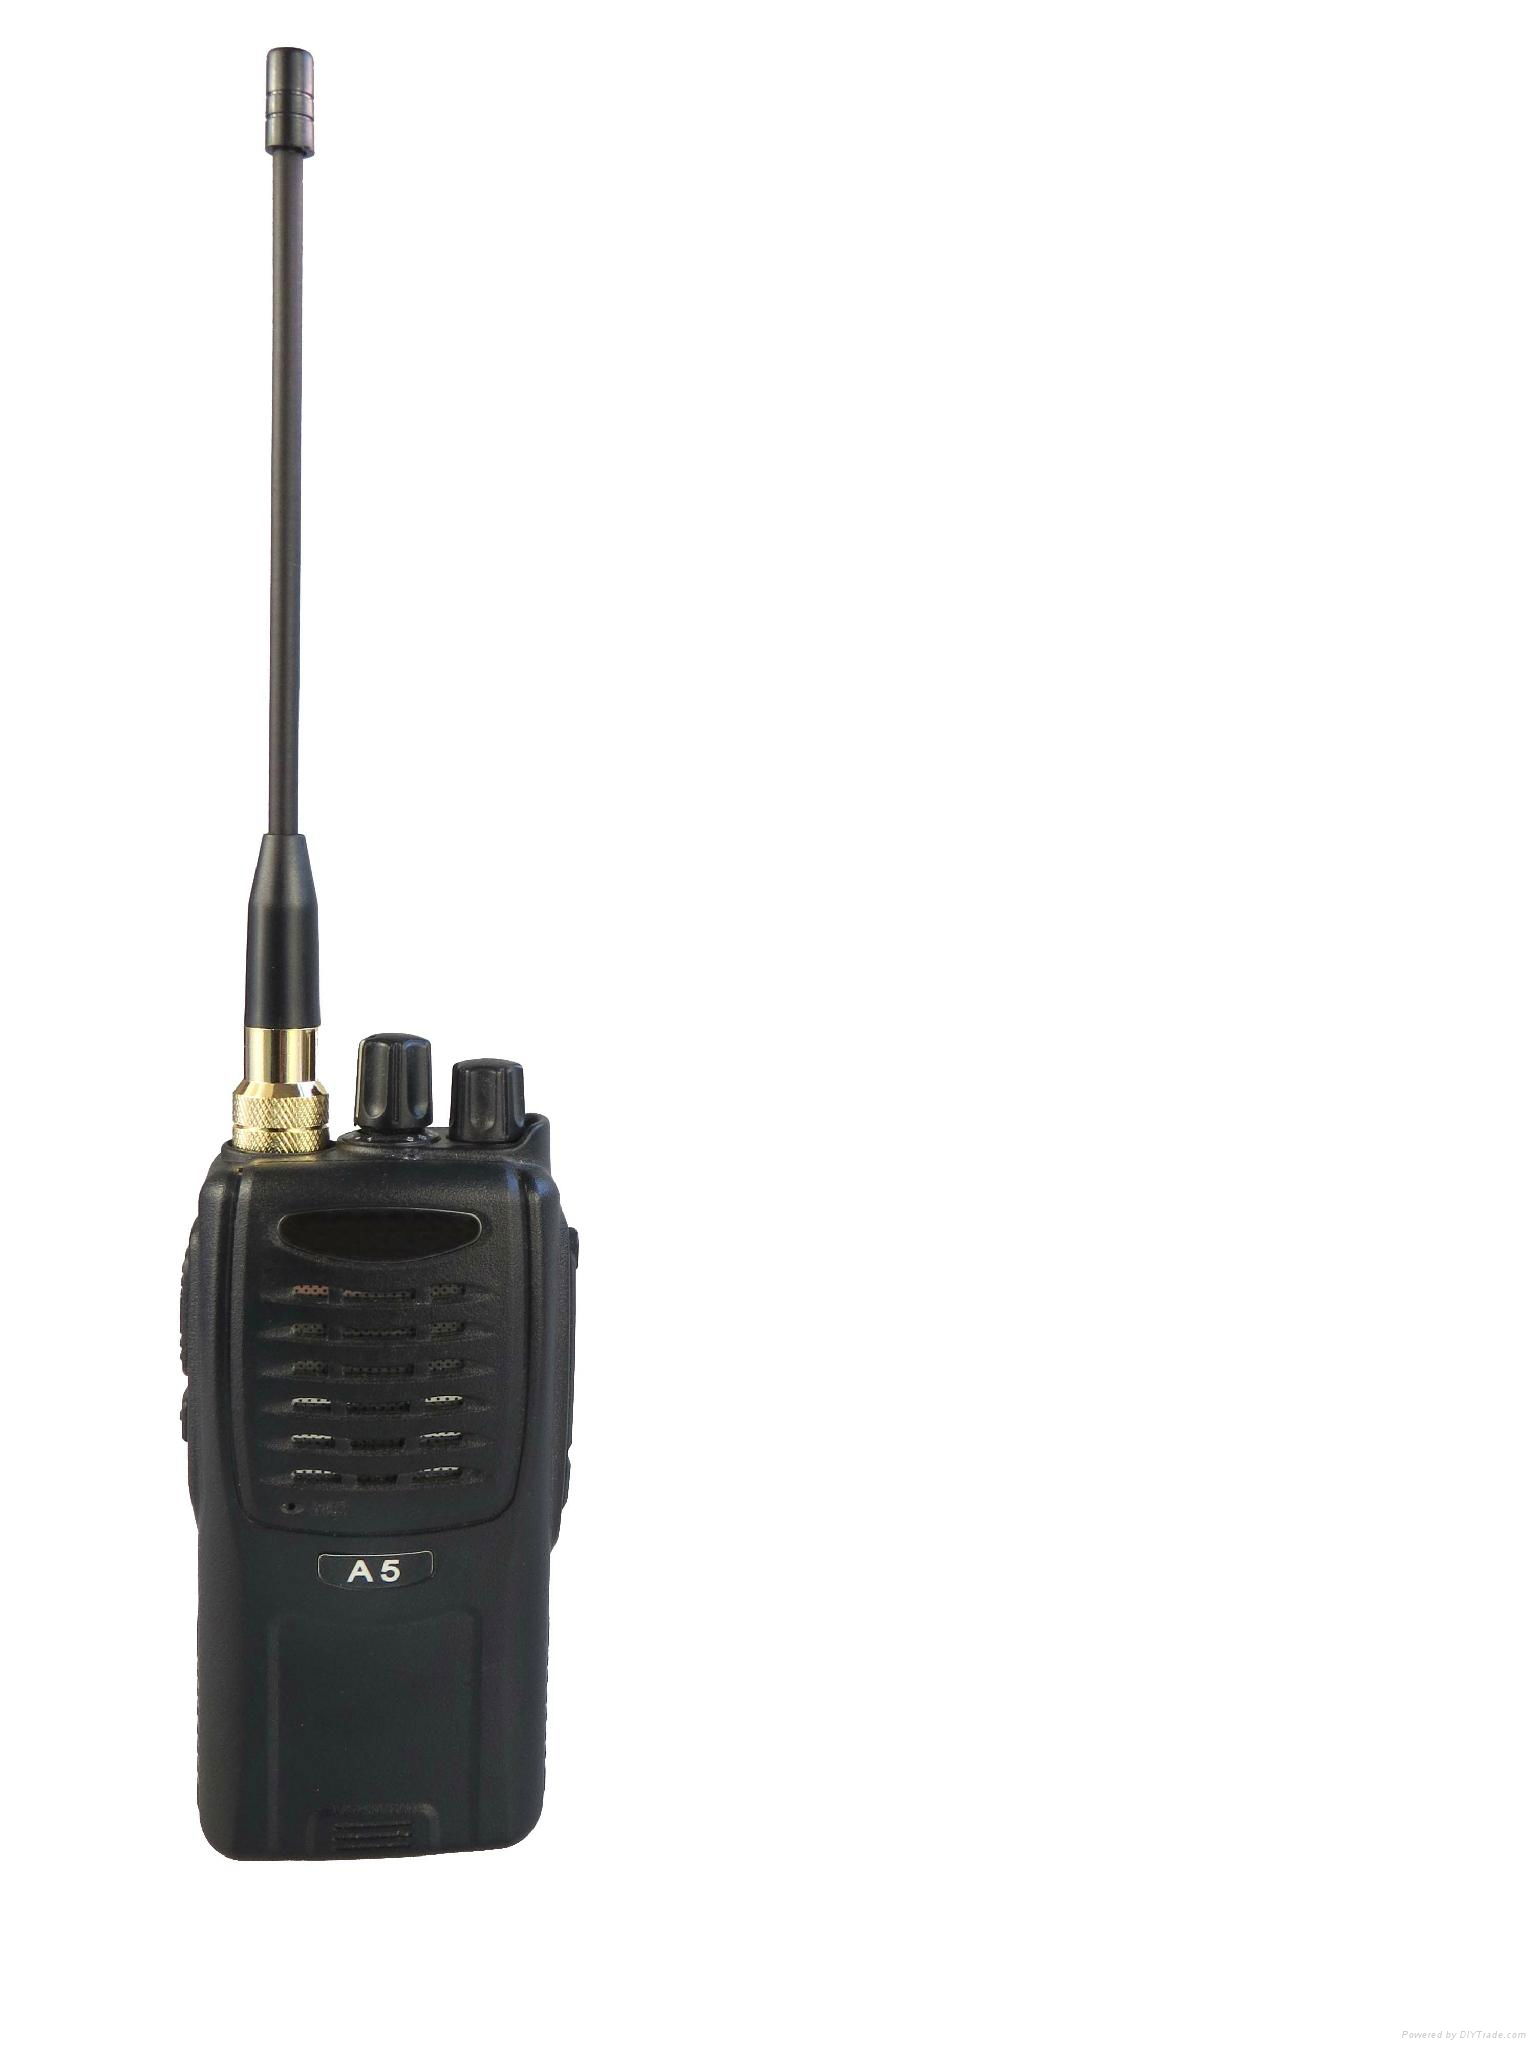 A5 UHF 450-470MHz Wireless Handheld Two-way Radio 3